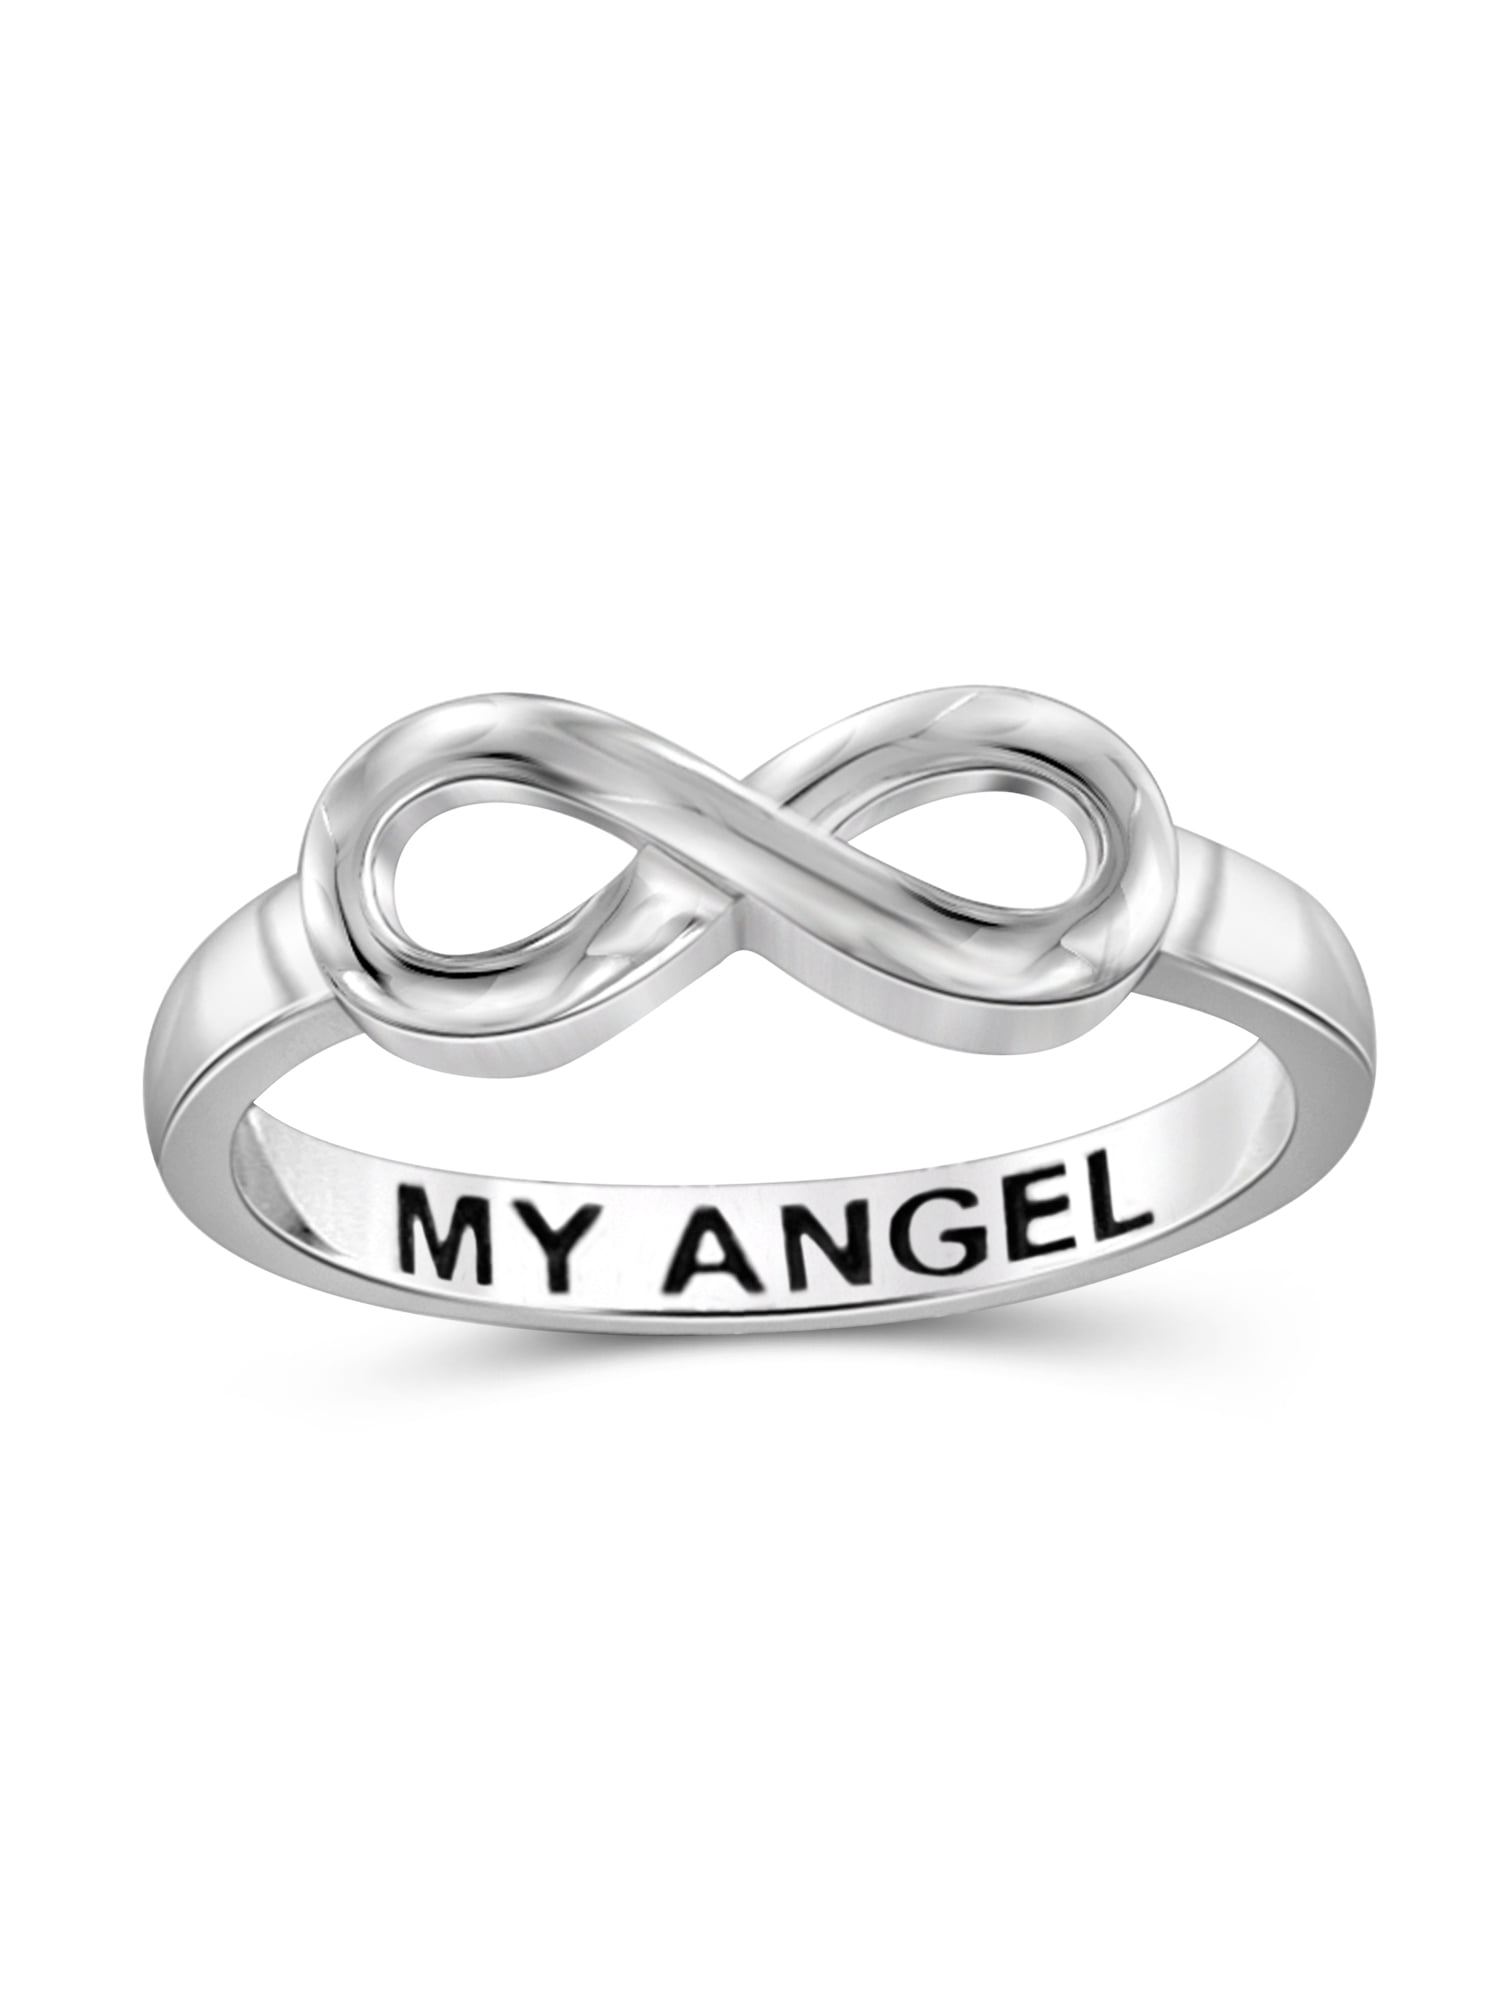 Welsh Love Silver Ring ,Silver Friendship rings by nuala-art